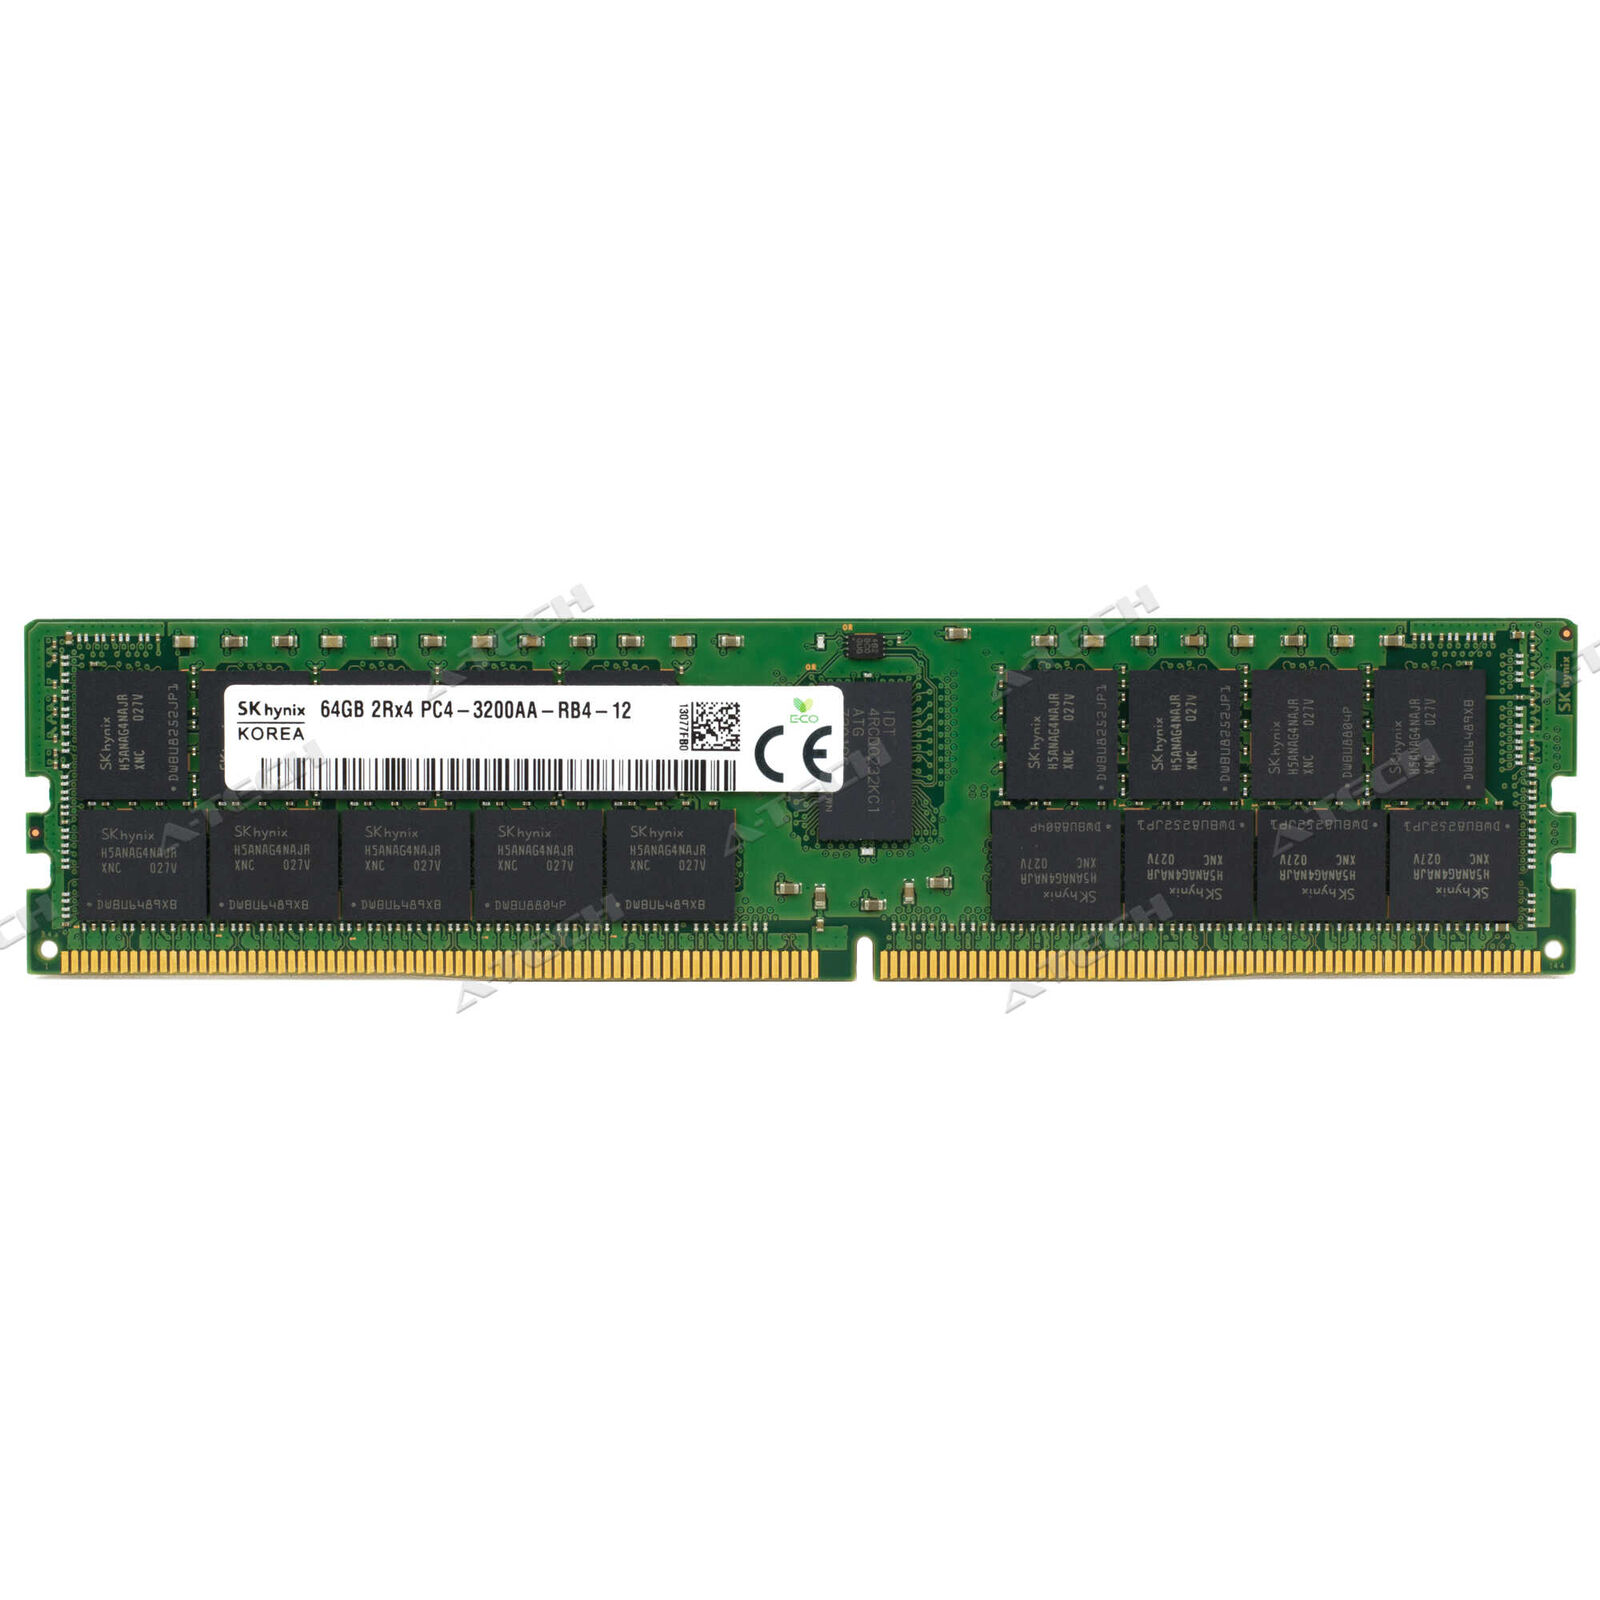 Hynix 64GB DDR4-3200 RDIMM HMAA8GR7AJR4N-XN HMAA8GR7CJR4N-XN Server Memory RAM